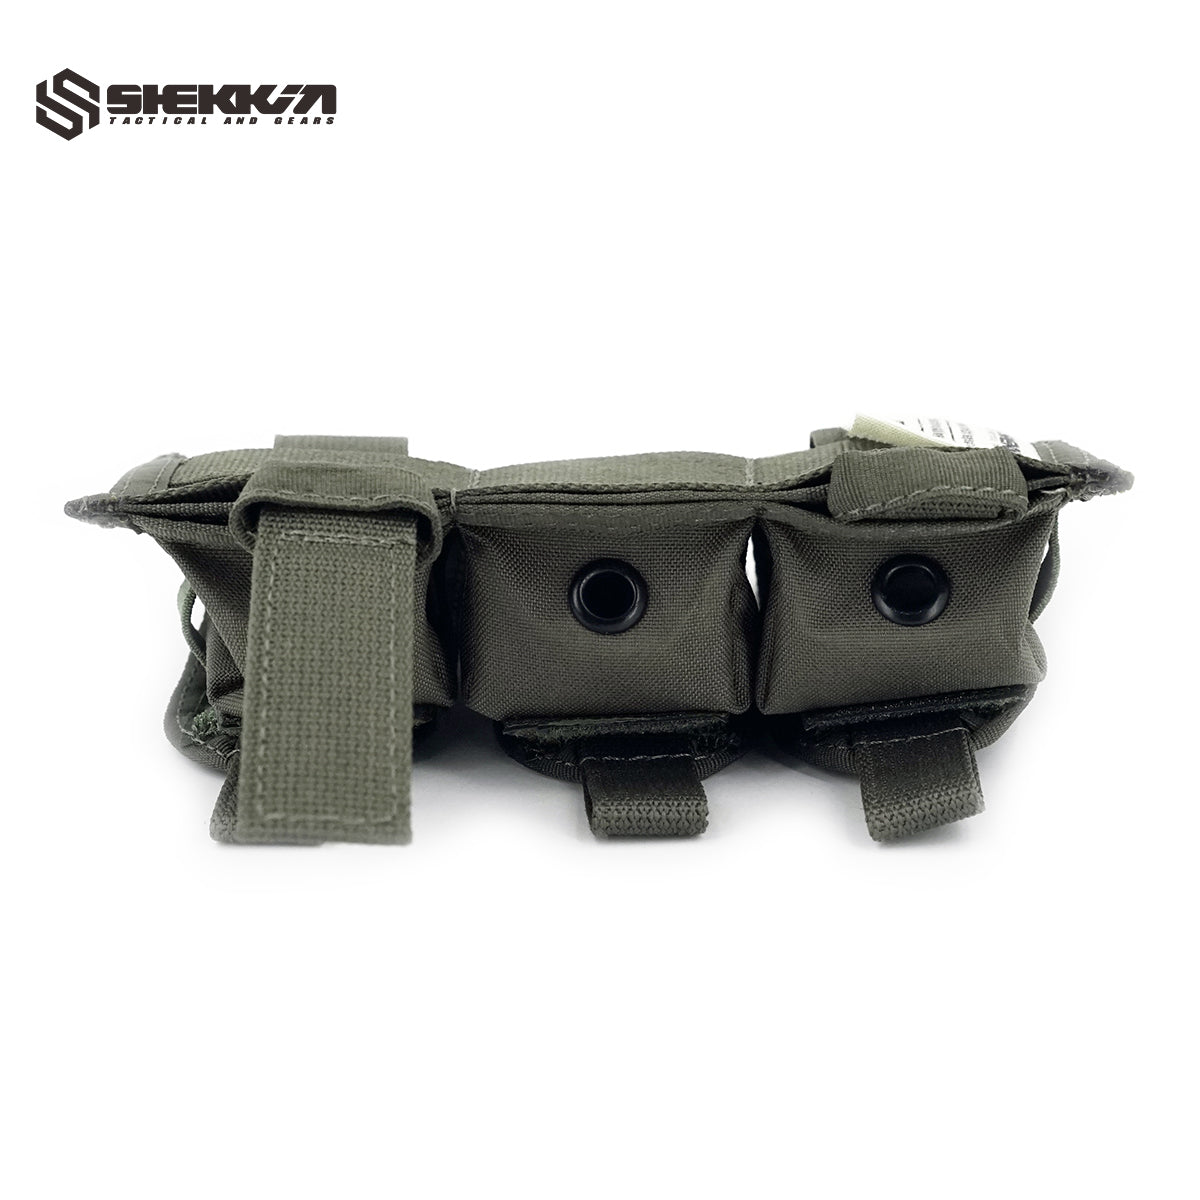 Pre MSA paraclete style triple flashbang pouch - Shekkin Gears